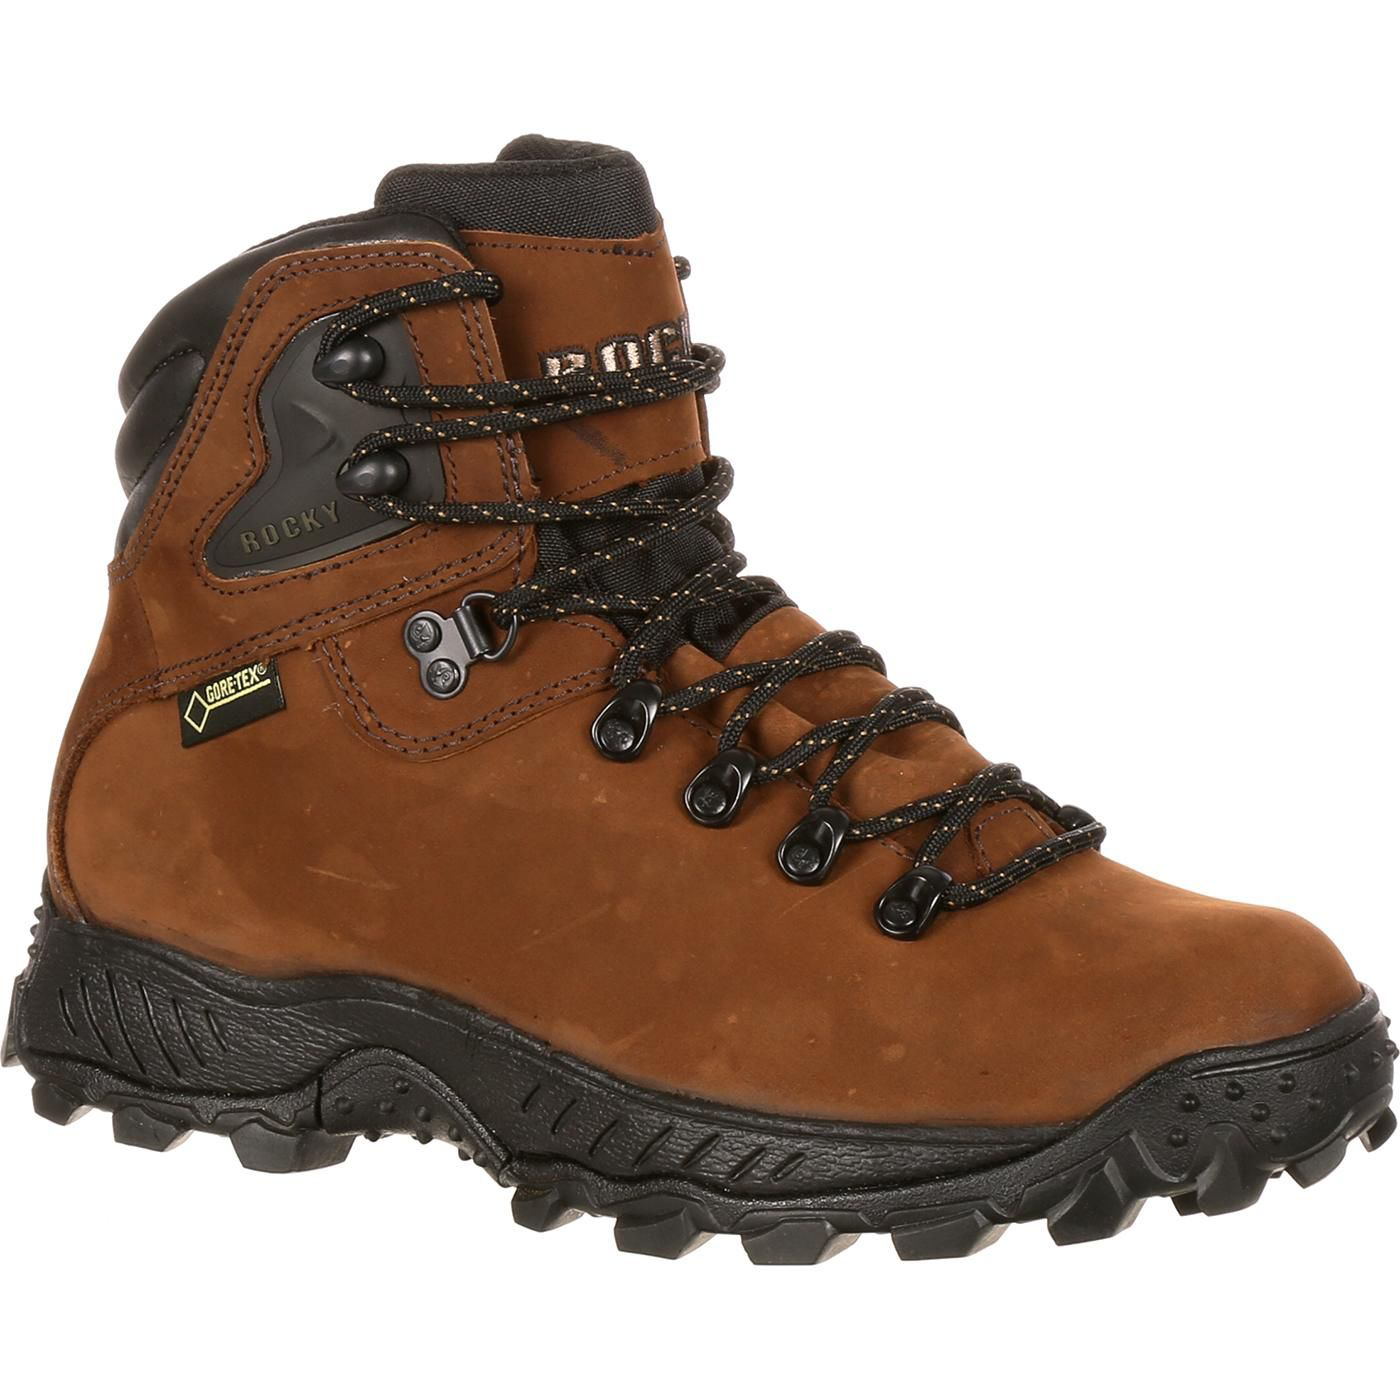 Rocky Ridgetop GORE-TEX 6"" Hiking Boots for Men - Brown - 7.5M